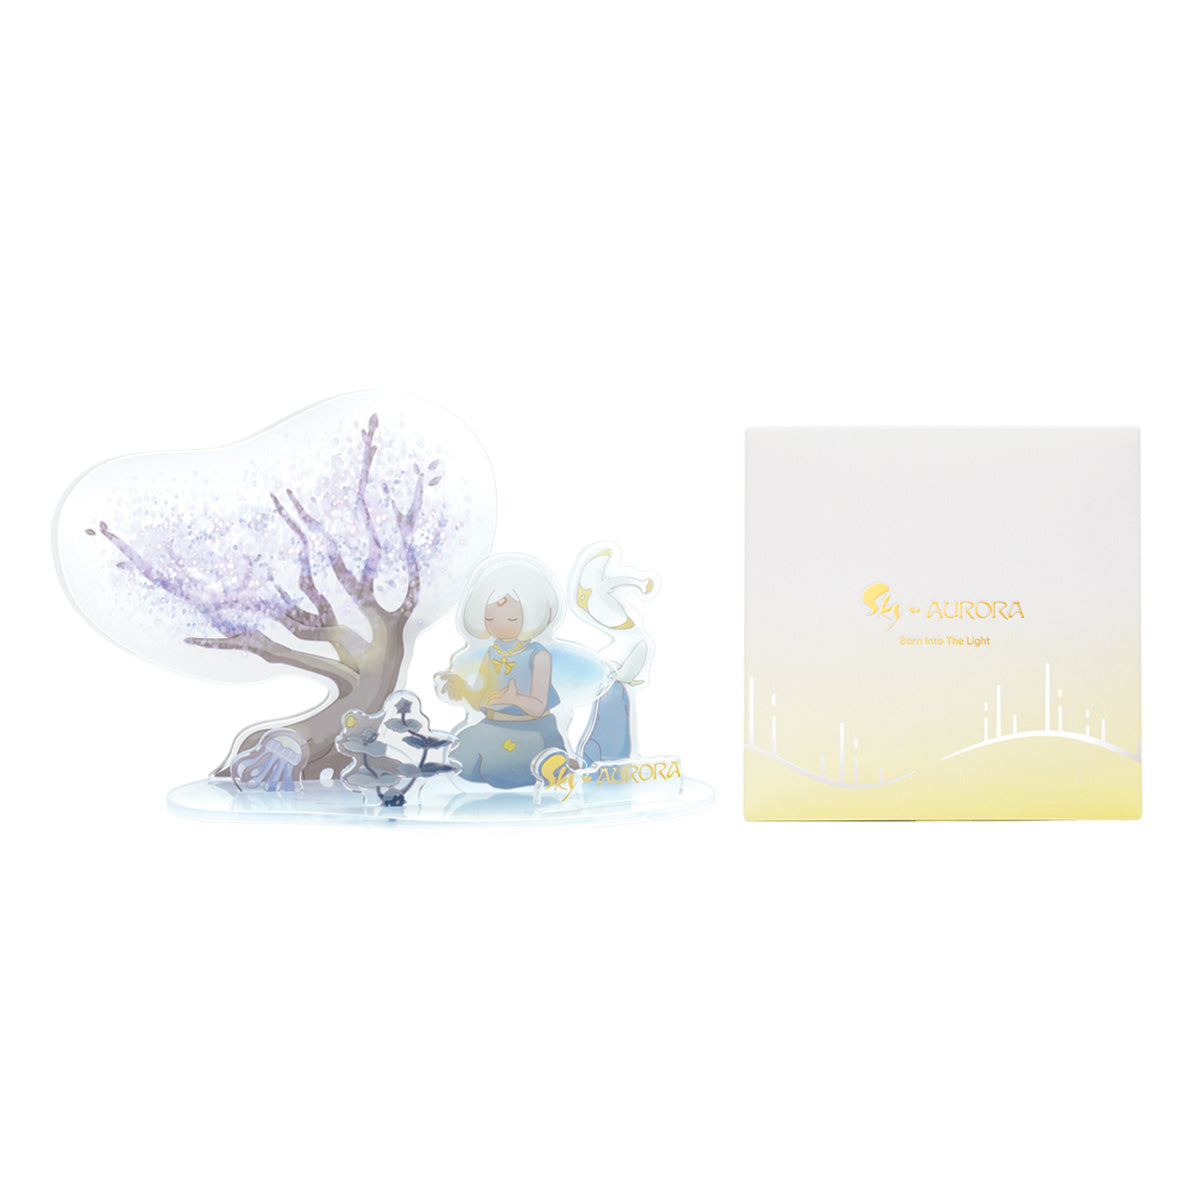 4th Anniversary Box - Sky x Le Petit Prince